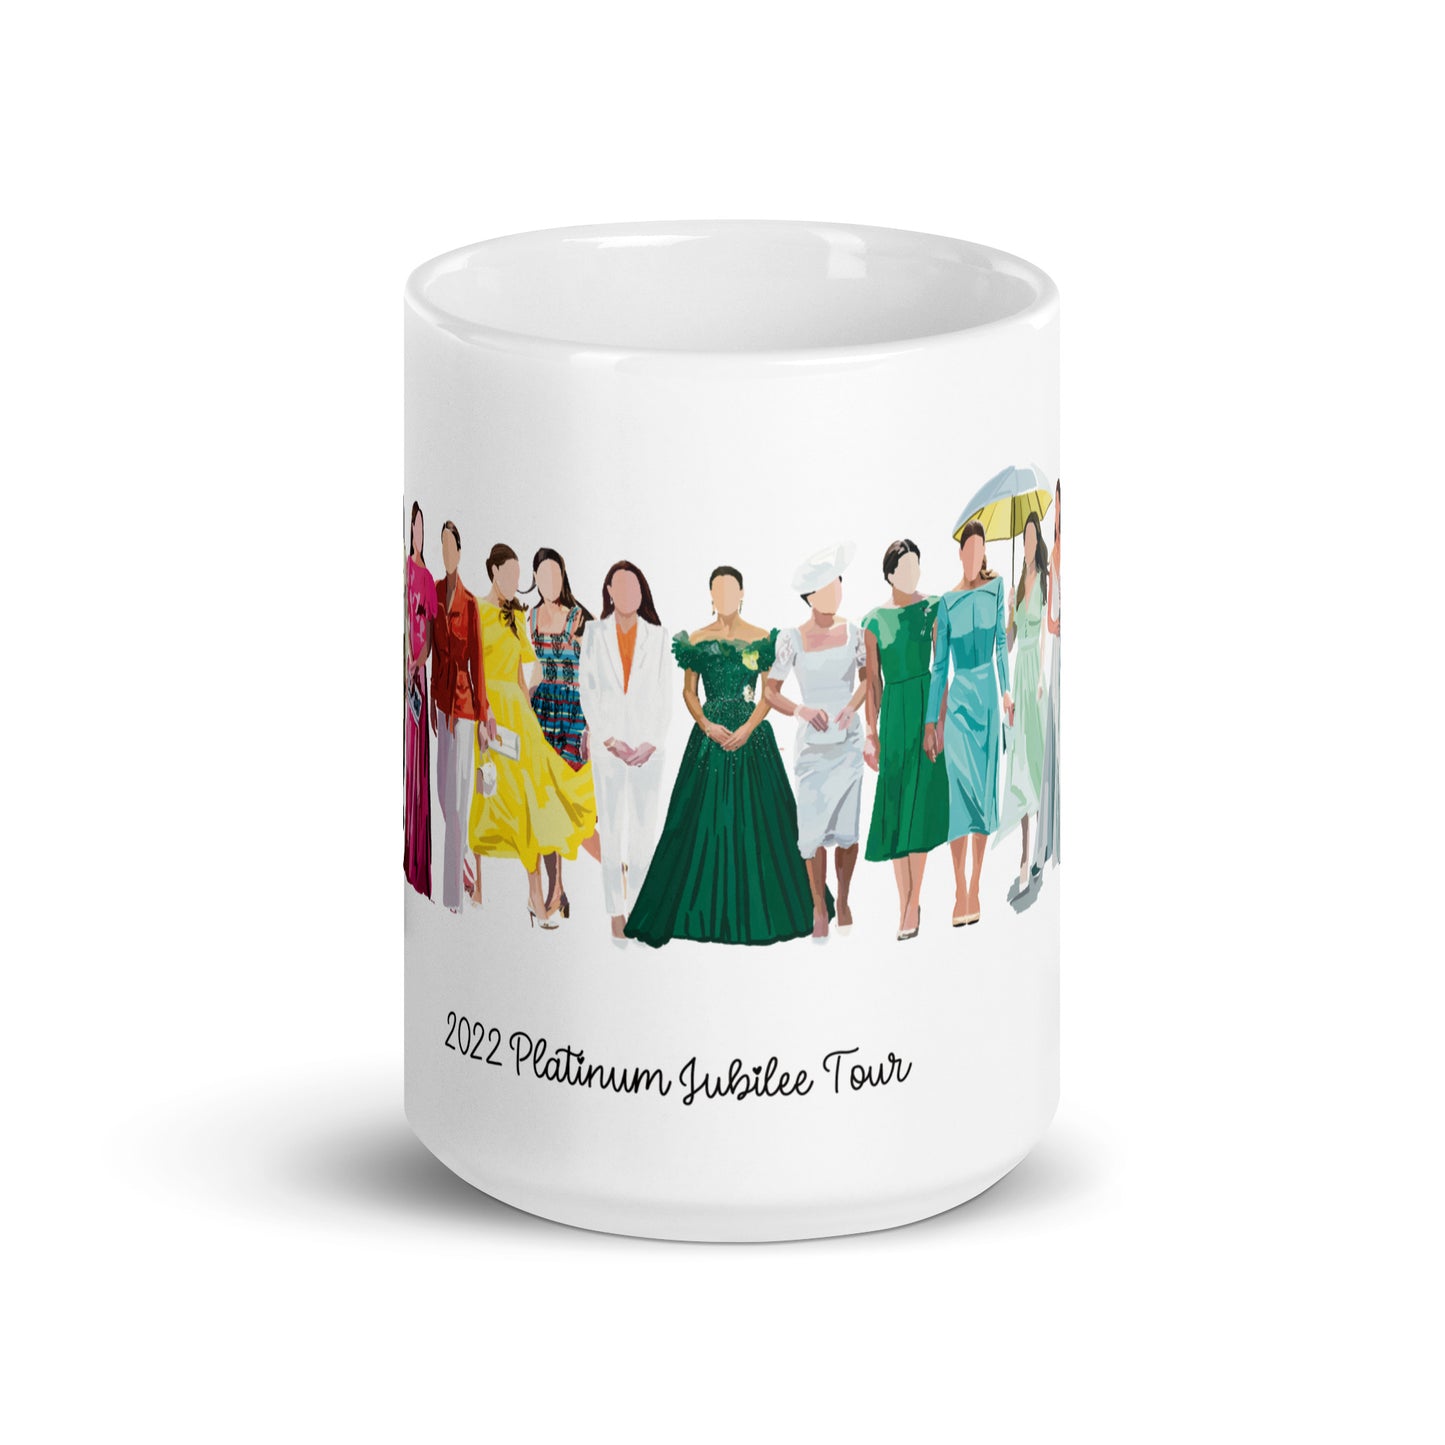 Kate jubilee tour White glossy mug